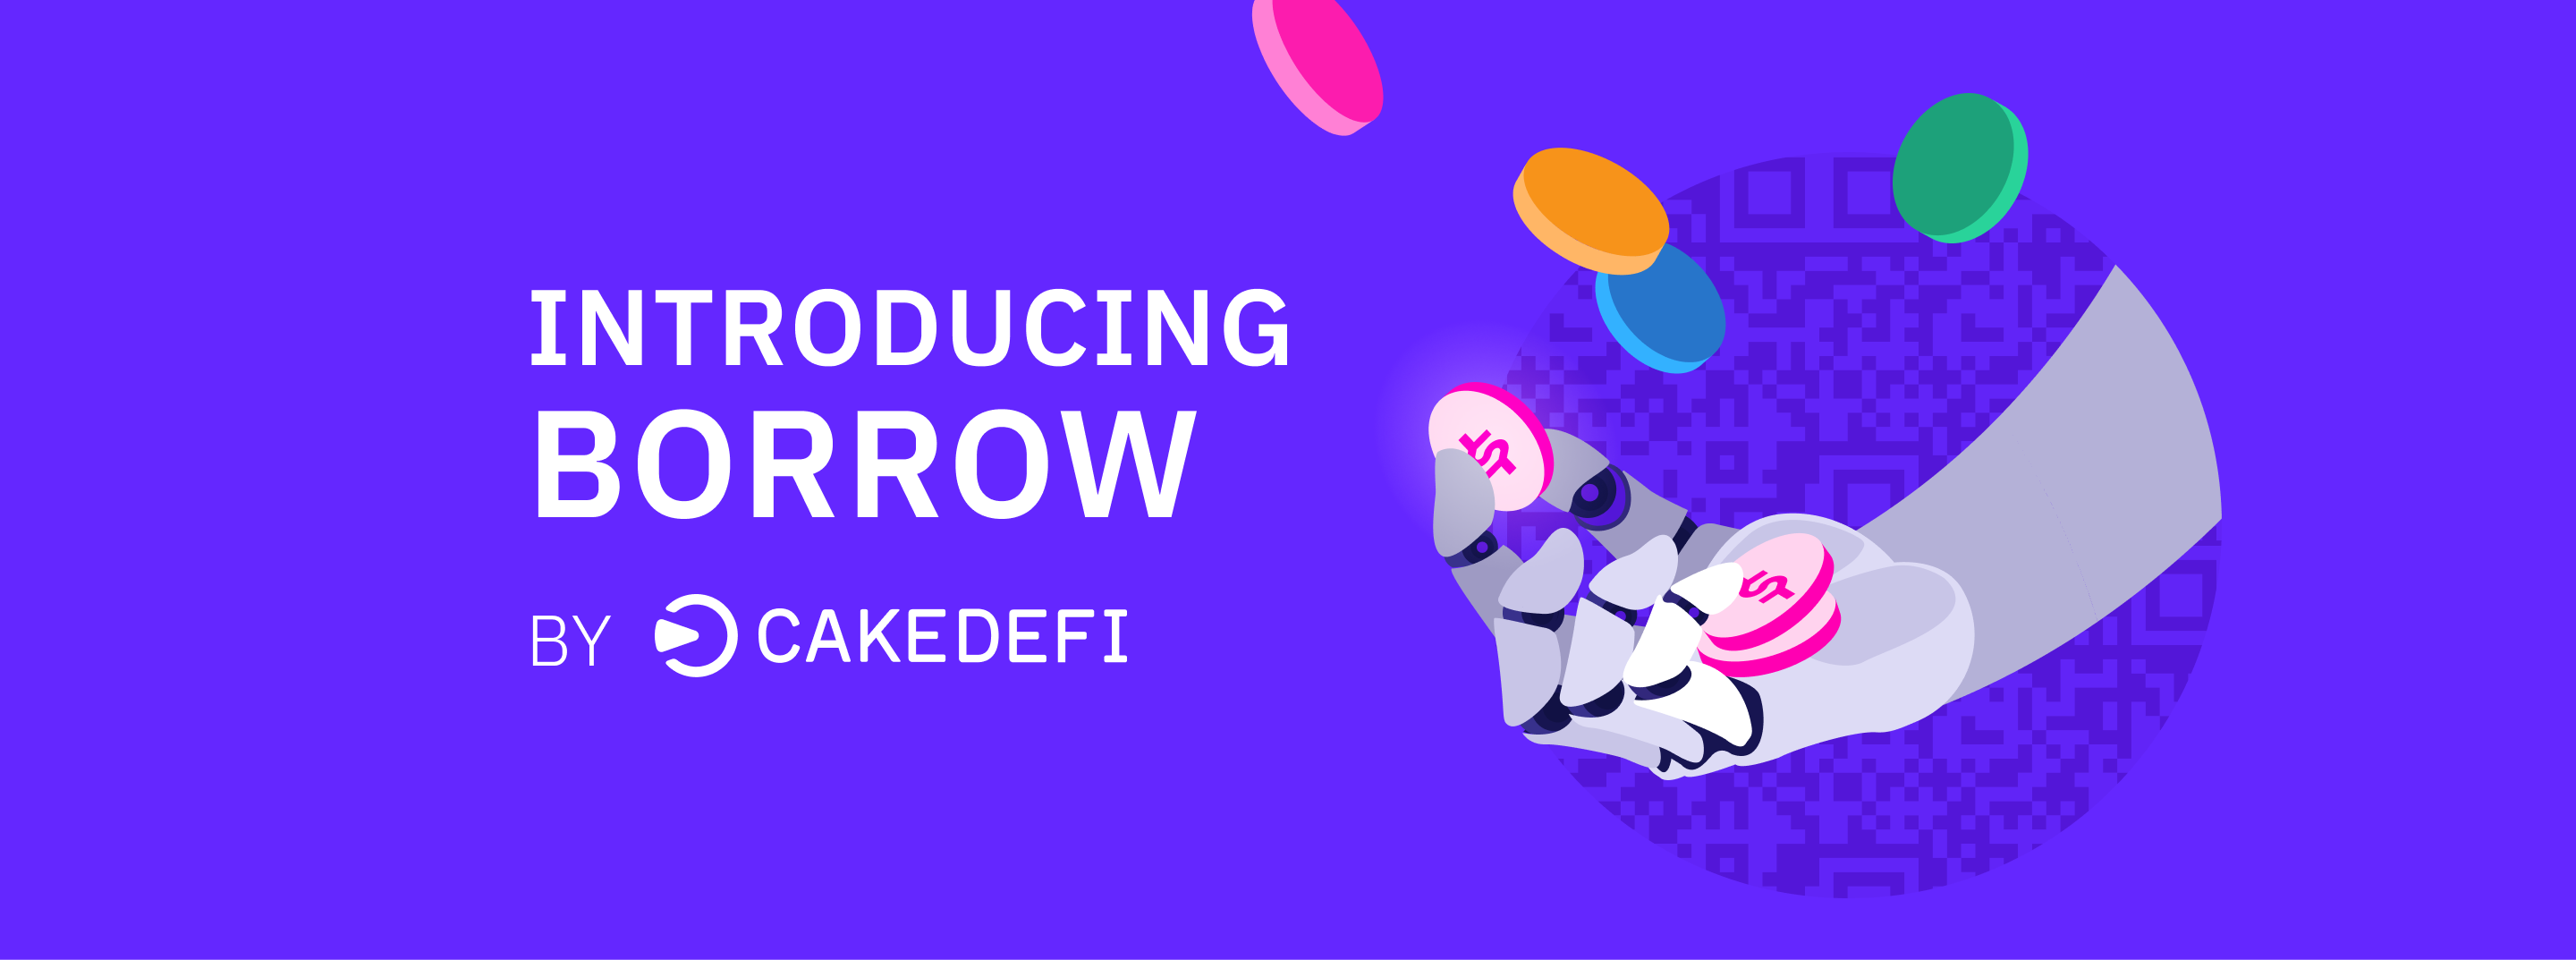 Introducing "Borrow" By Cake DeFi